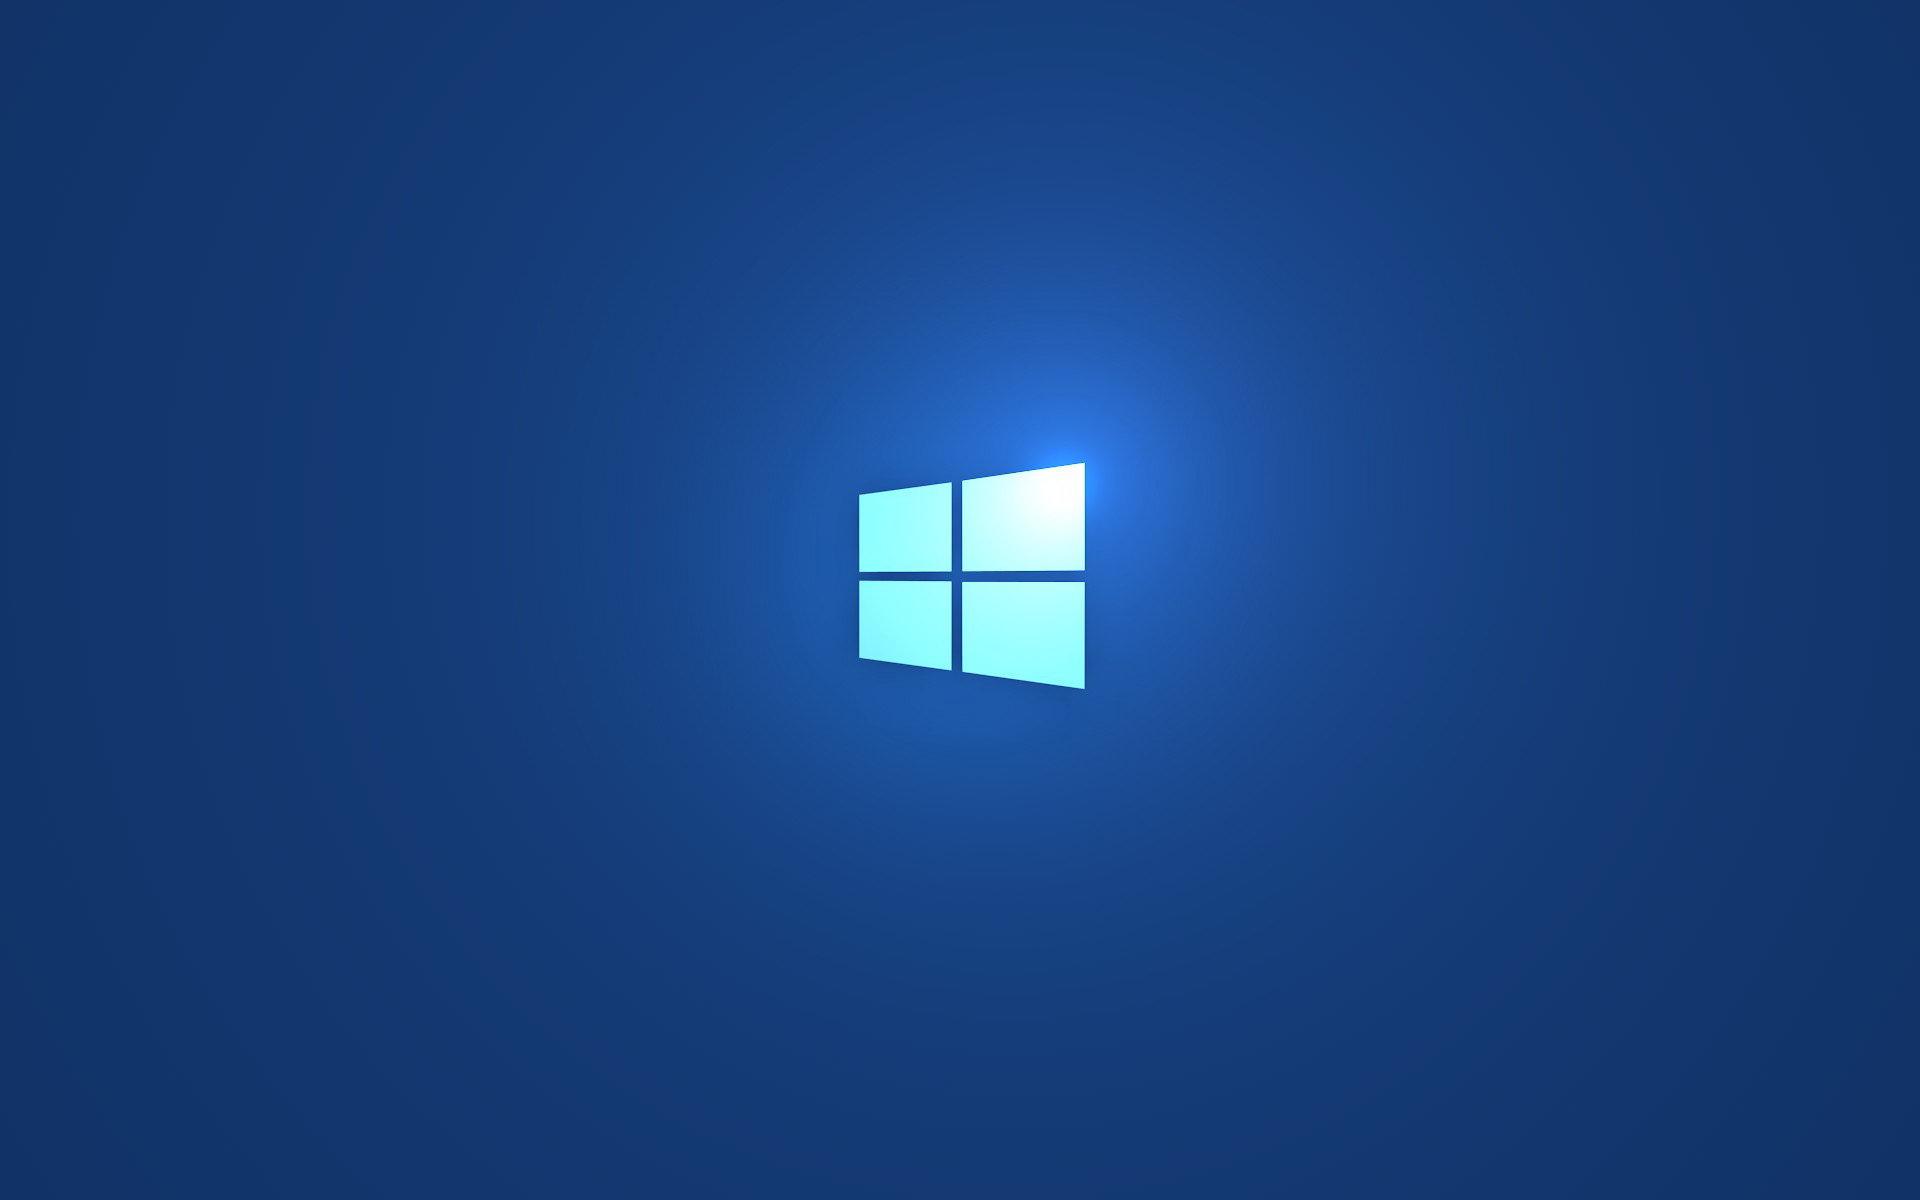 Windows 8.1 wallpaper HD for desktop background